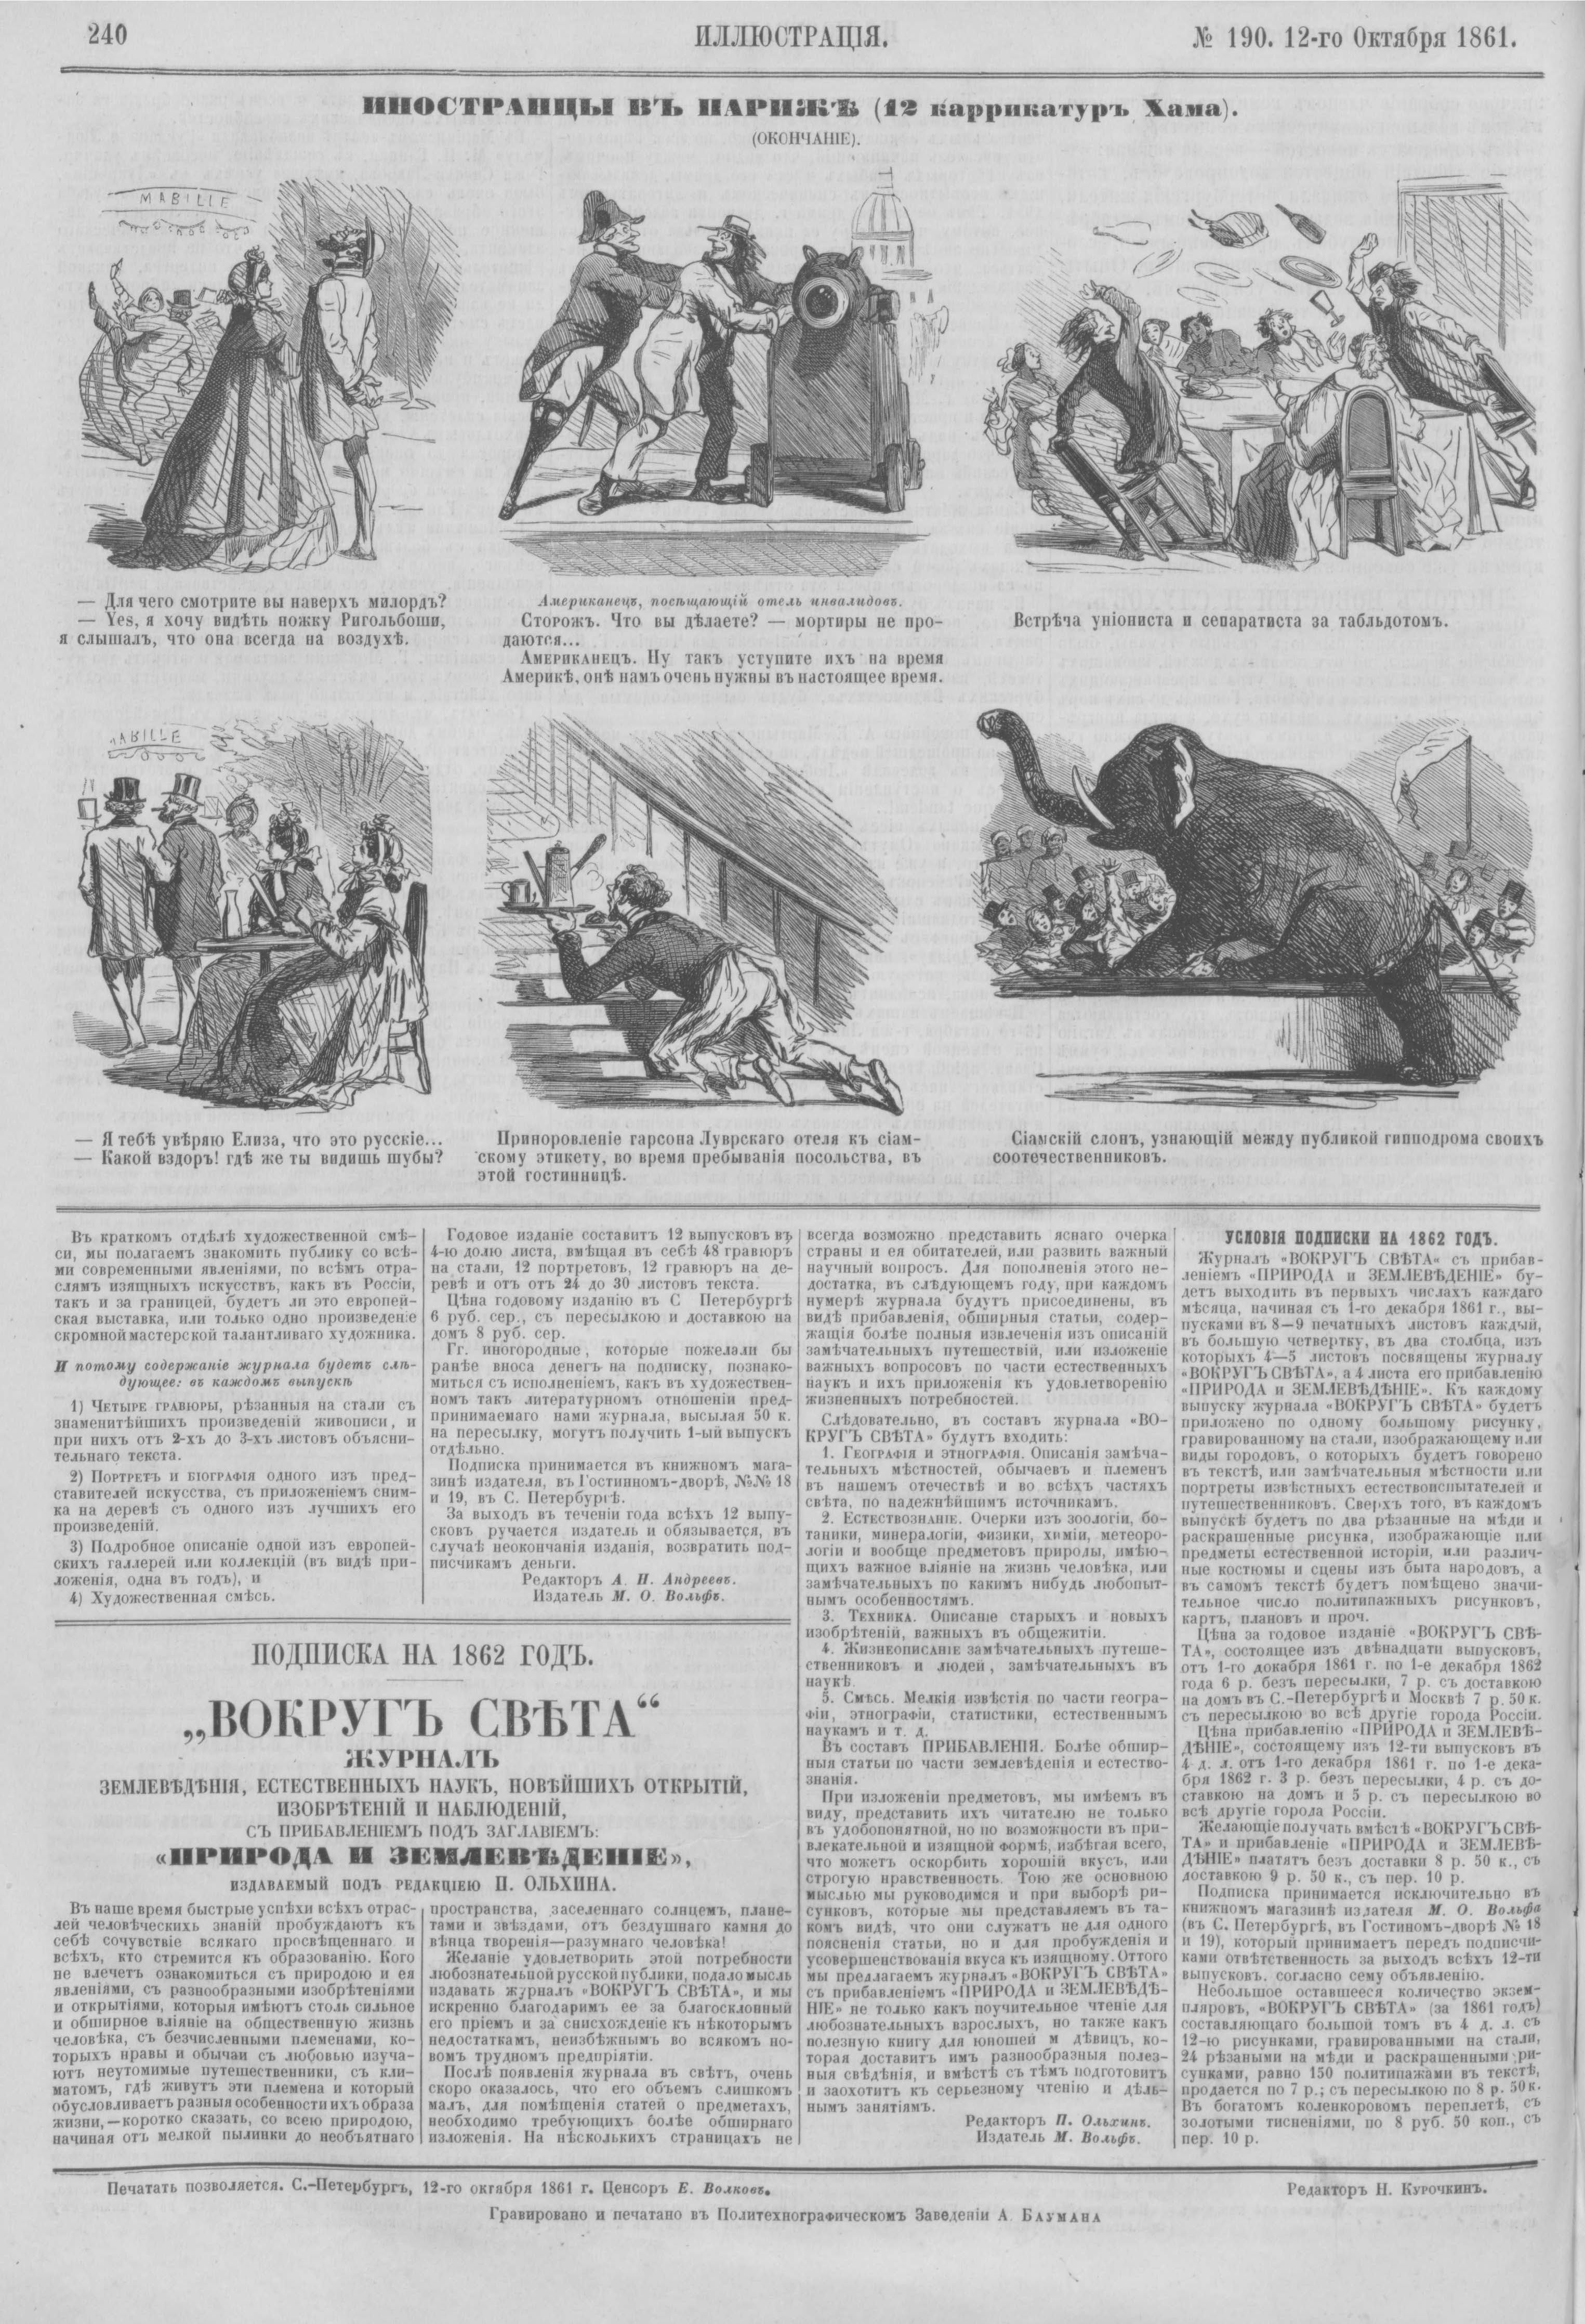 Cham. Иностранцы в Париже. Илл., 1861 №190, 12 окт. С. 240.jpg